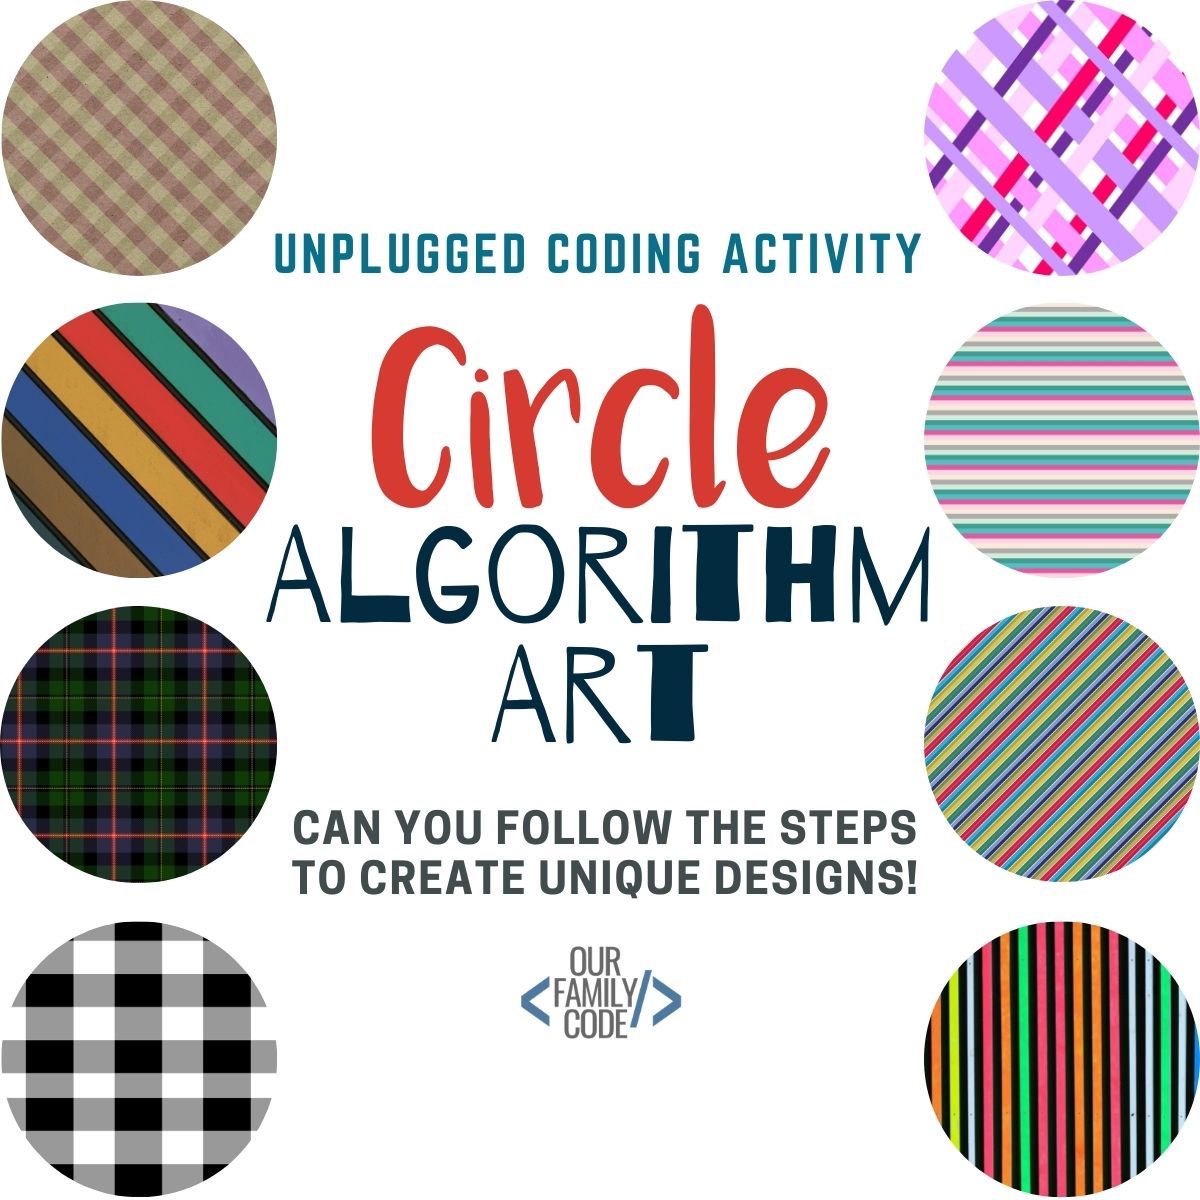 A picture of a circle algorithm art activity banner.